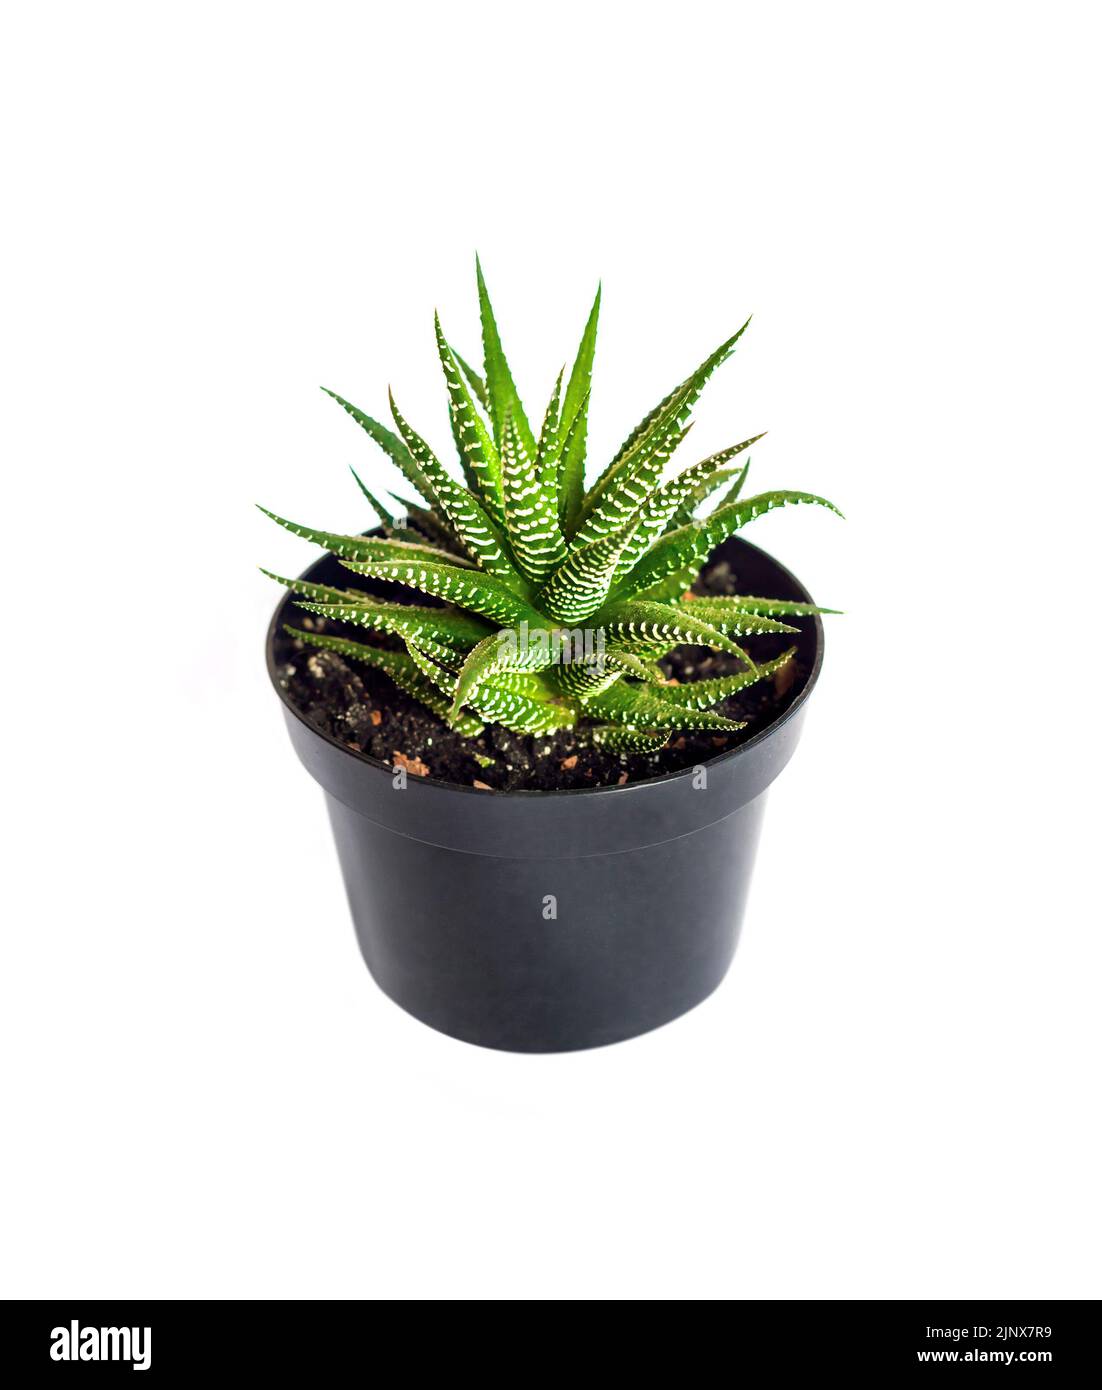 Haworthia plant (Haworthiopsis fasciata) in plastic pot isolated on white background Stock Photo